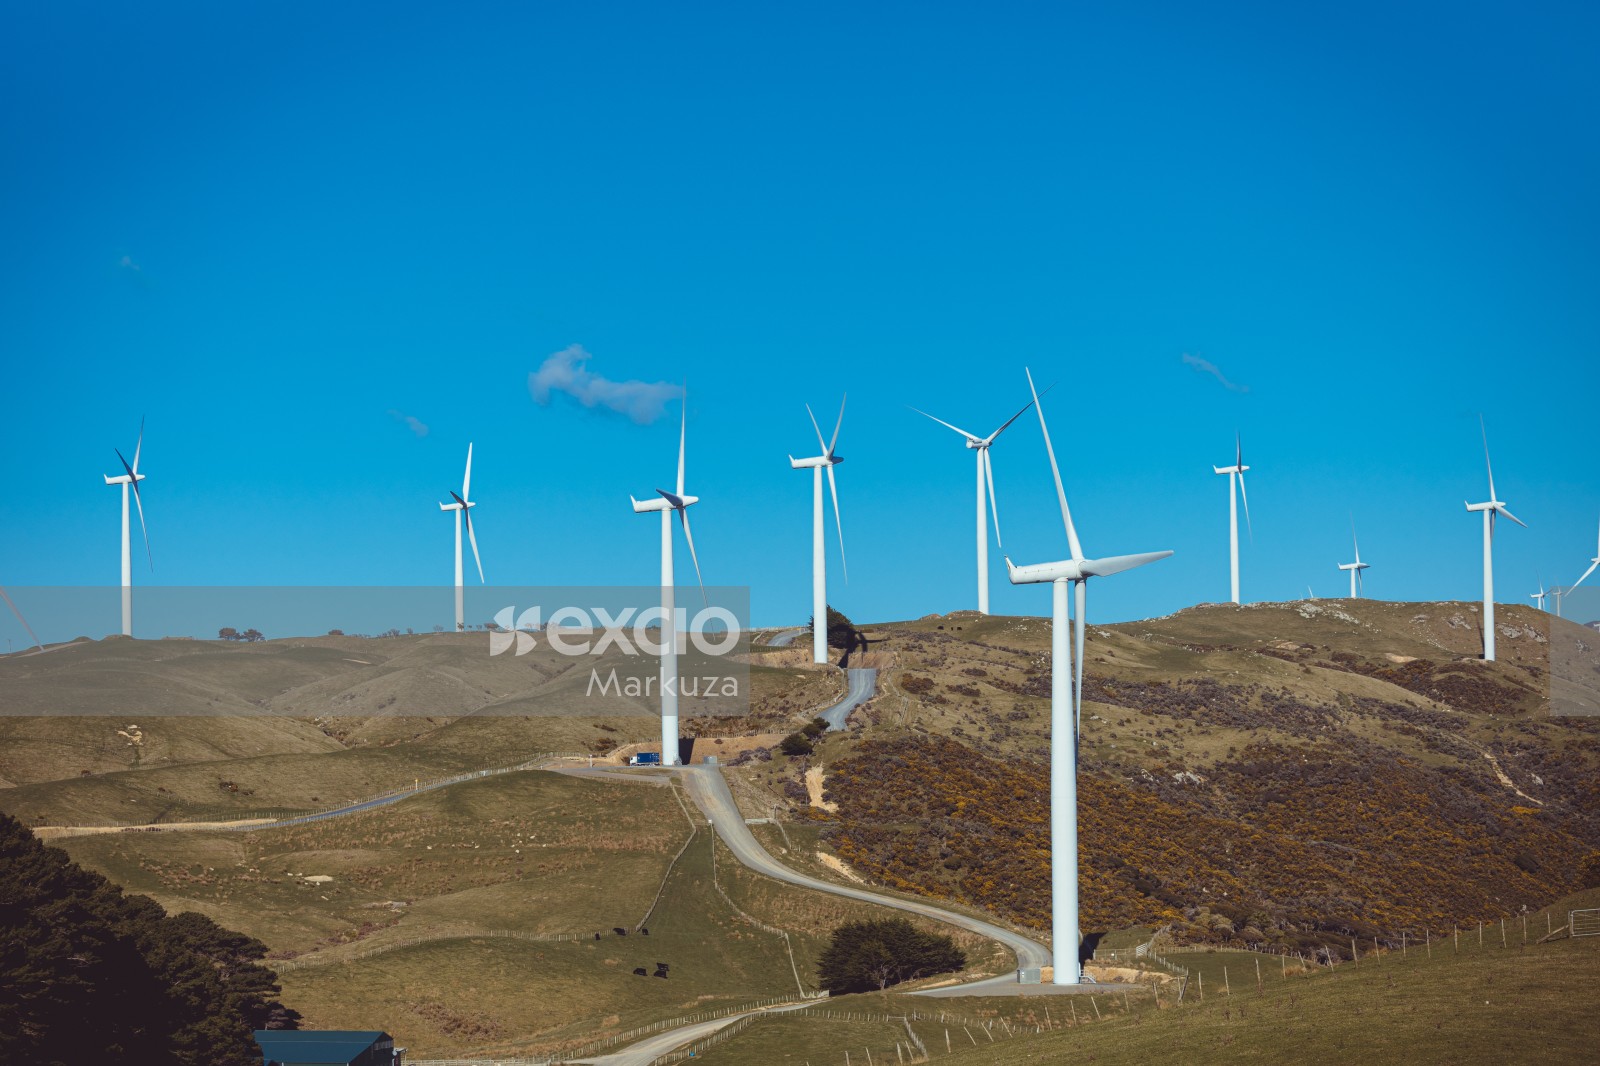 Wellington's windy roads through the wind farm